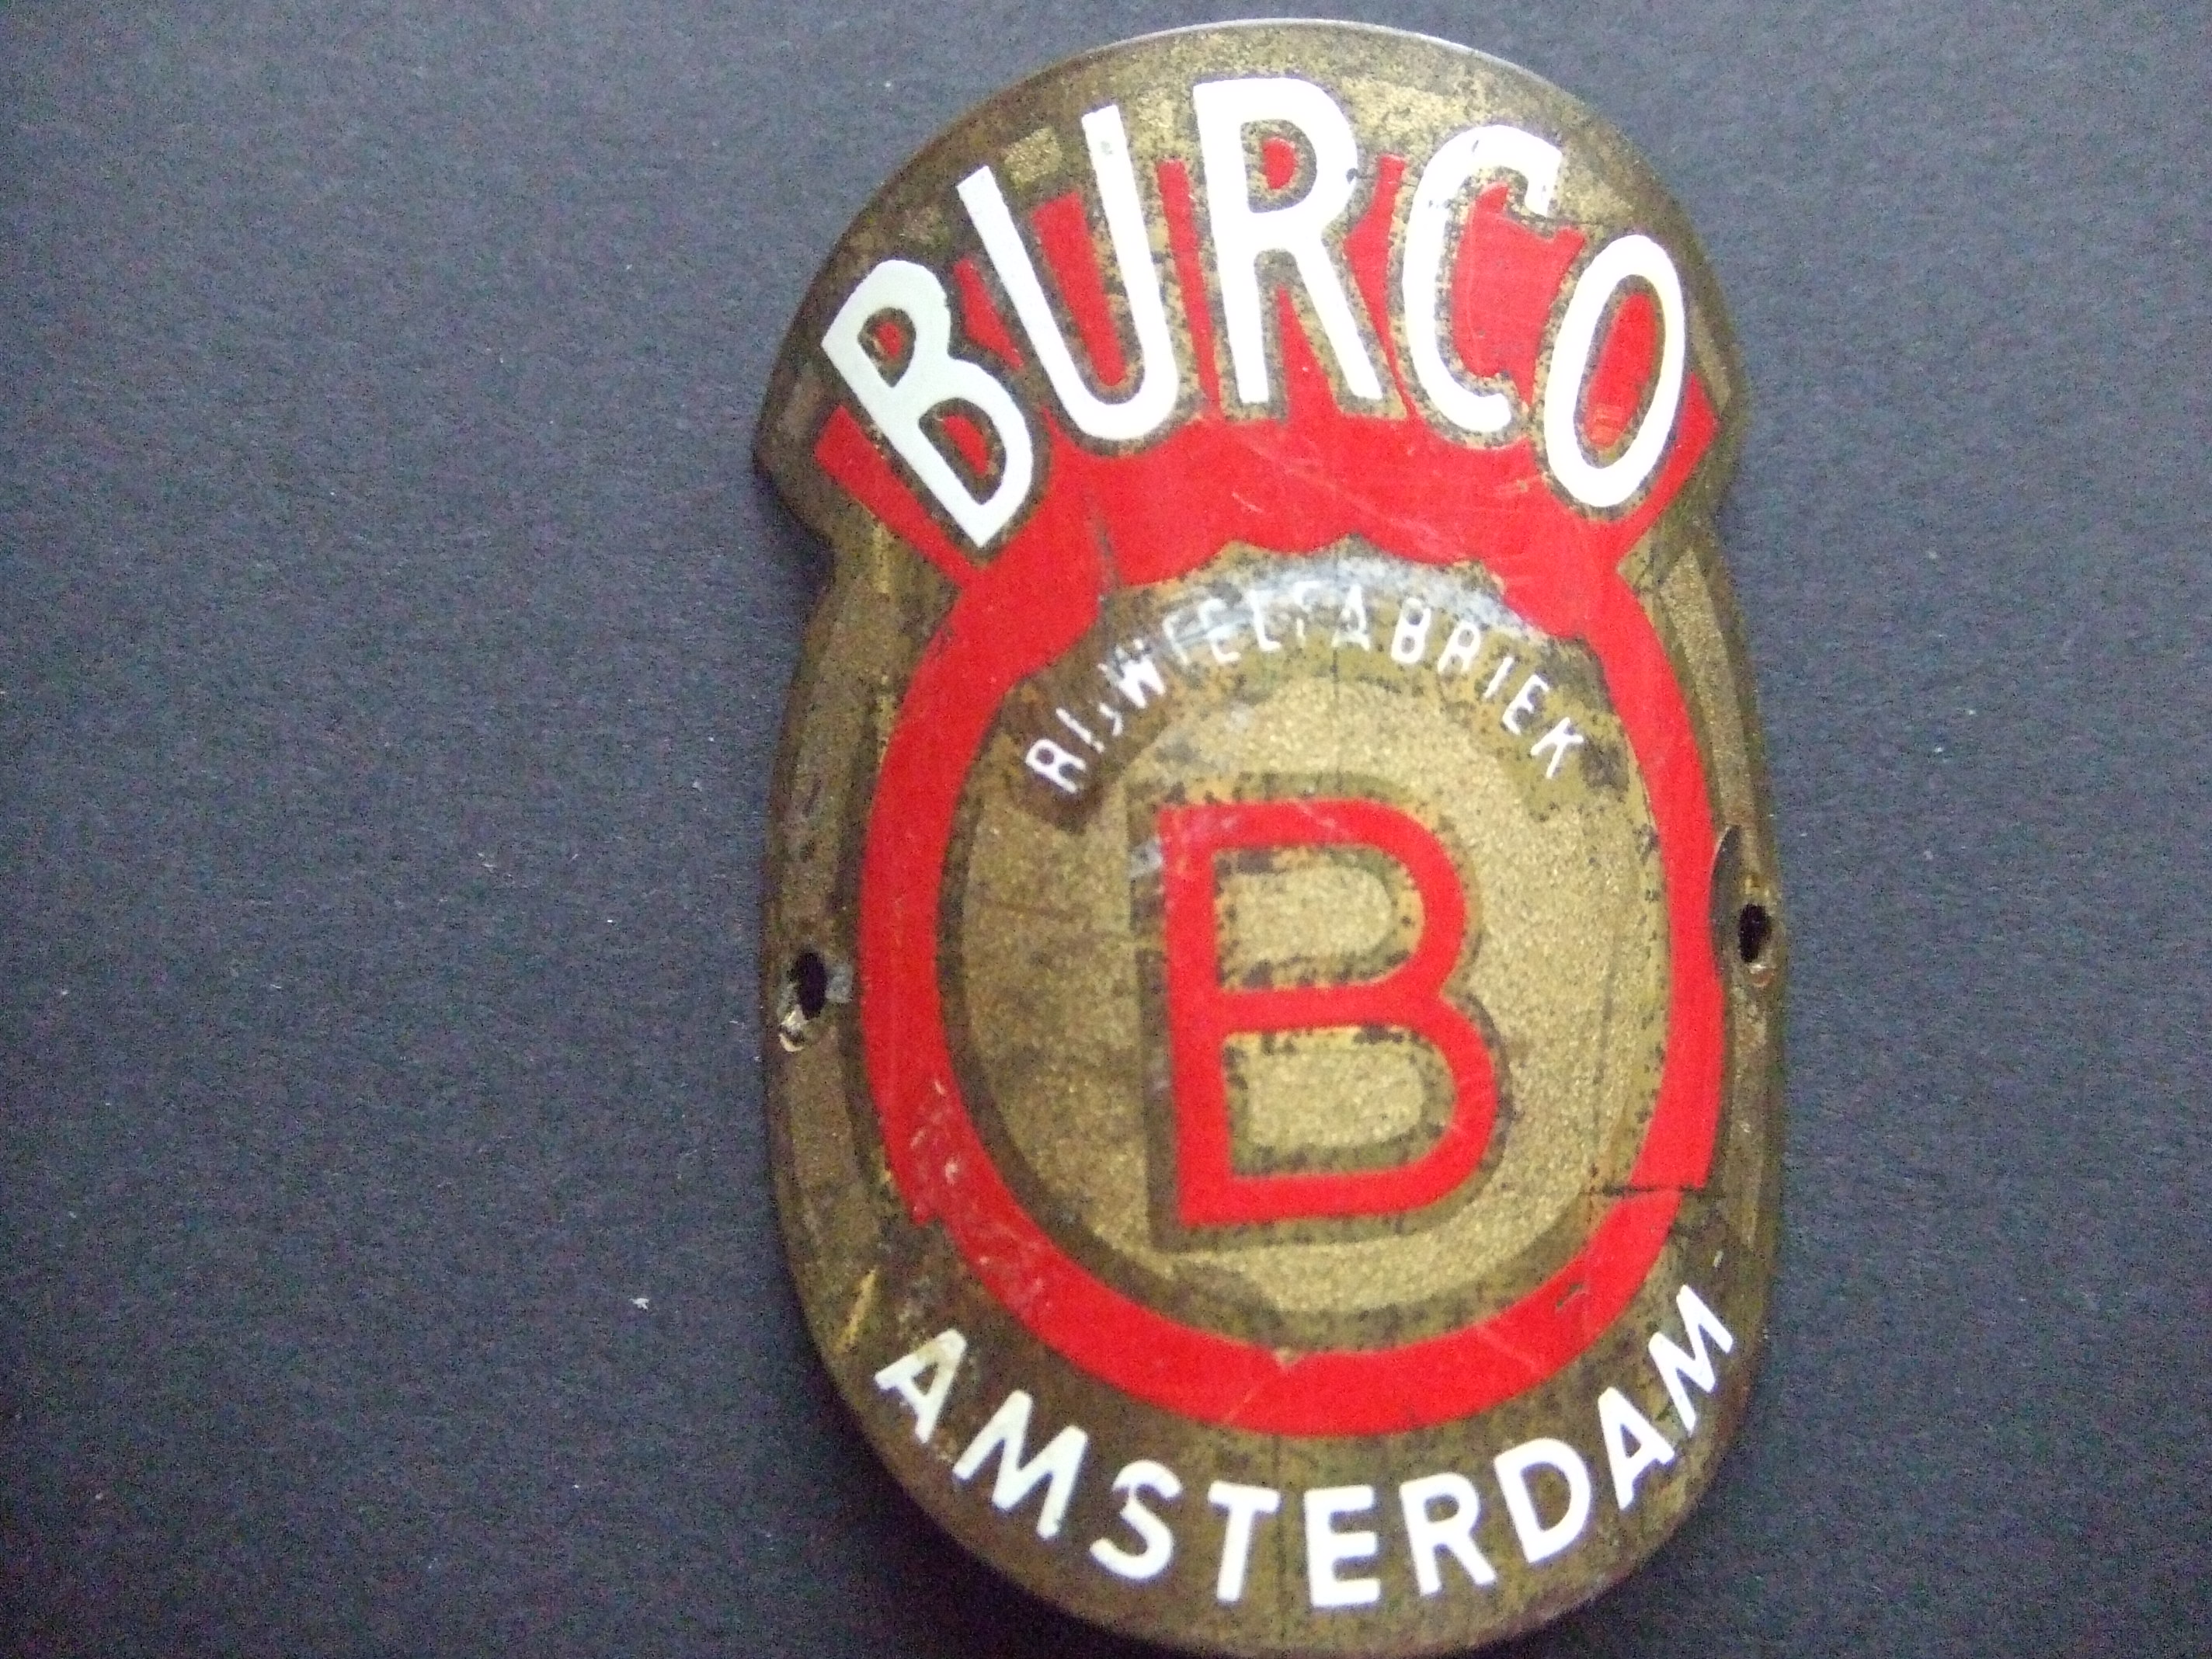 Burco rijwielfabriek Amsterdam balhoofdplaatje 7